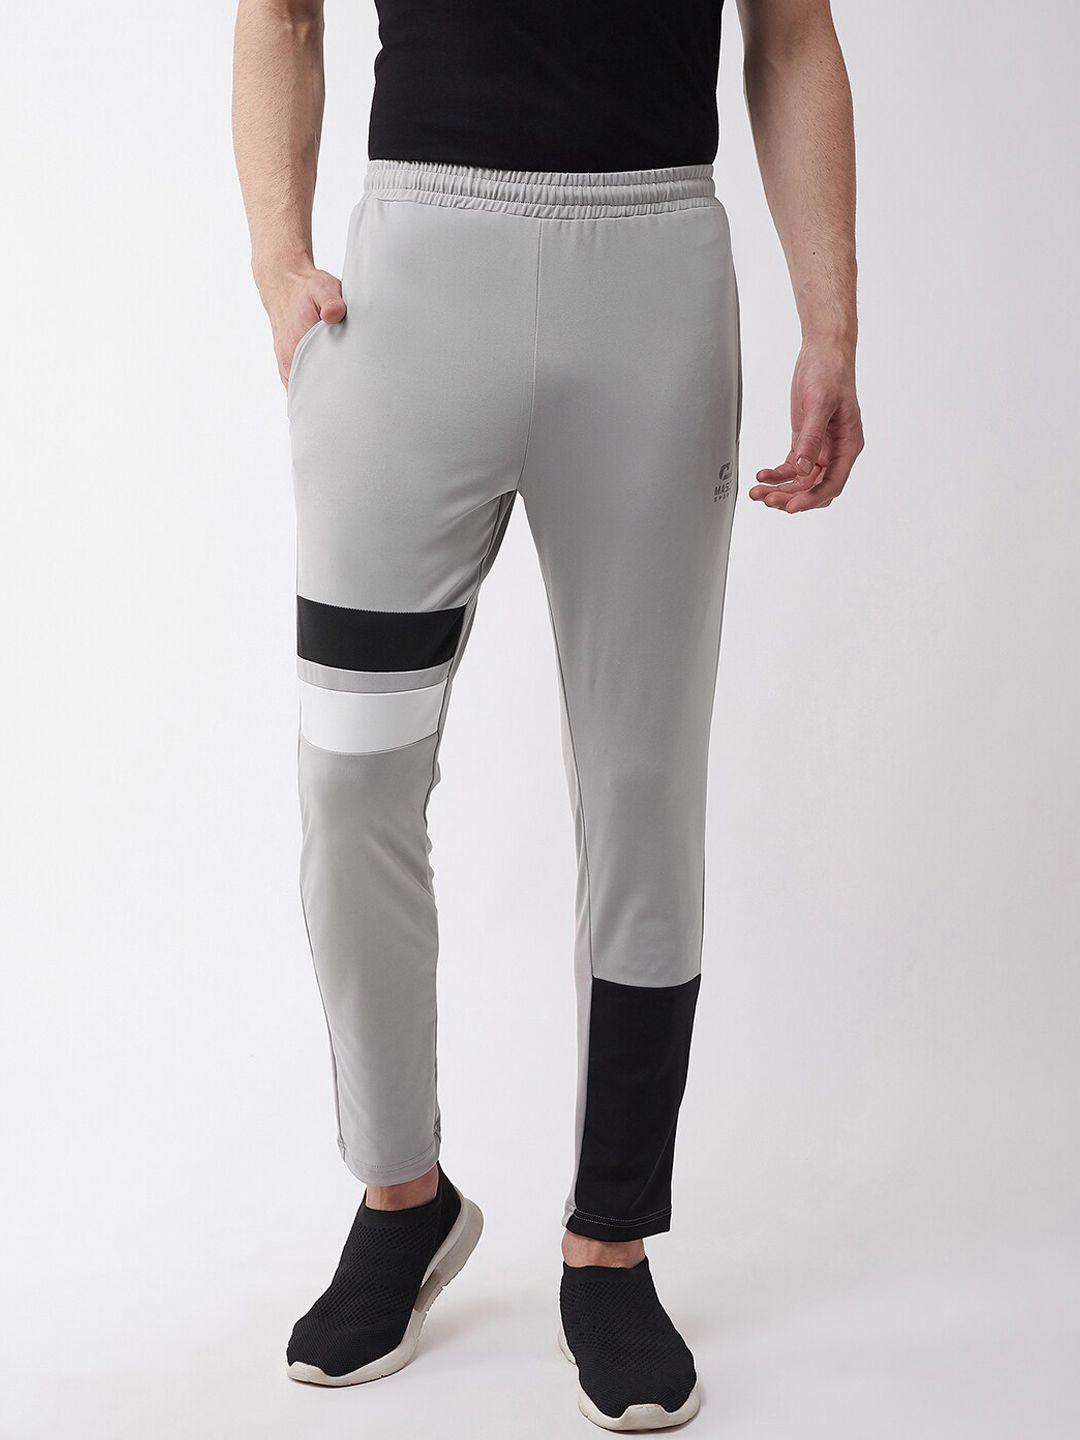 masch-sports-men-grey-&-black-colourblocked-dry-fit-track-pants